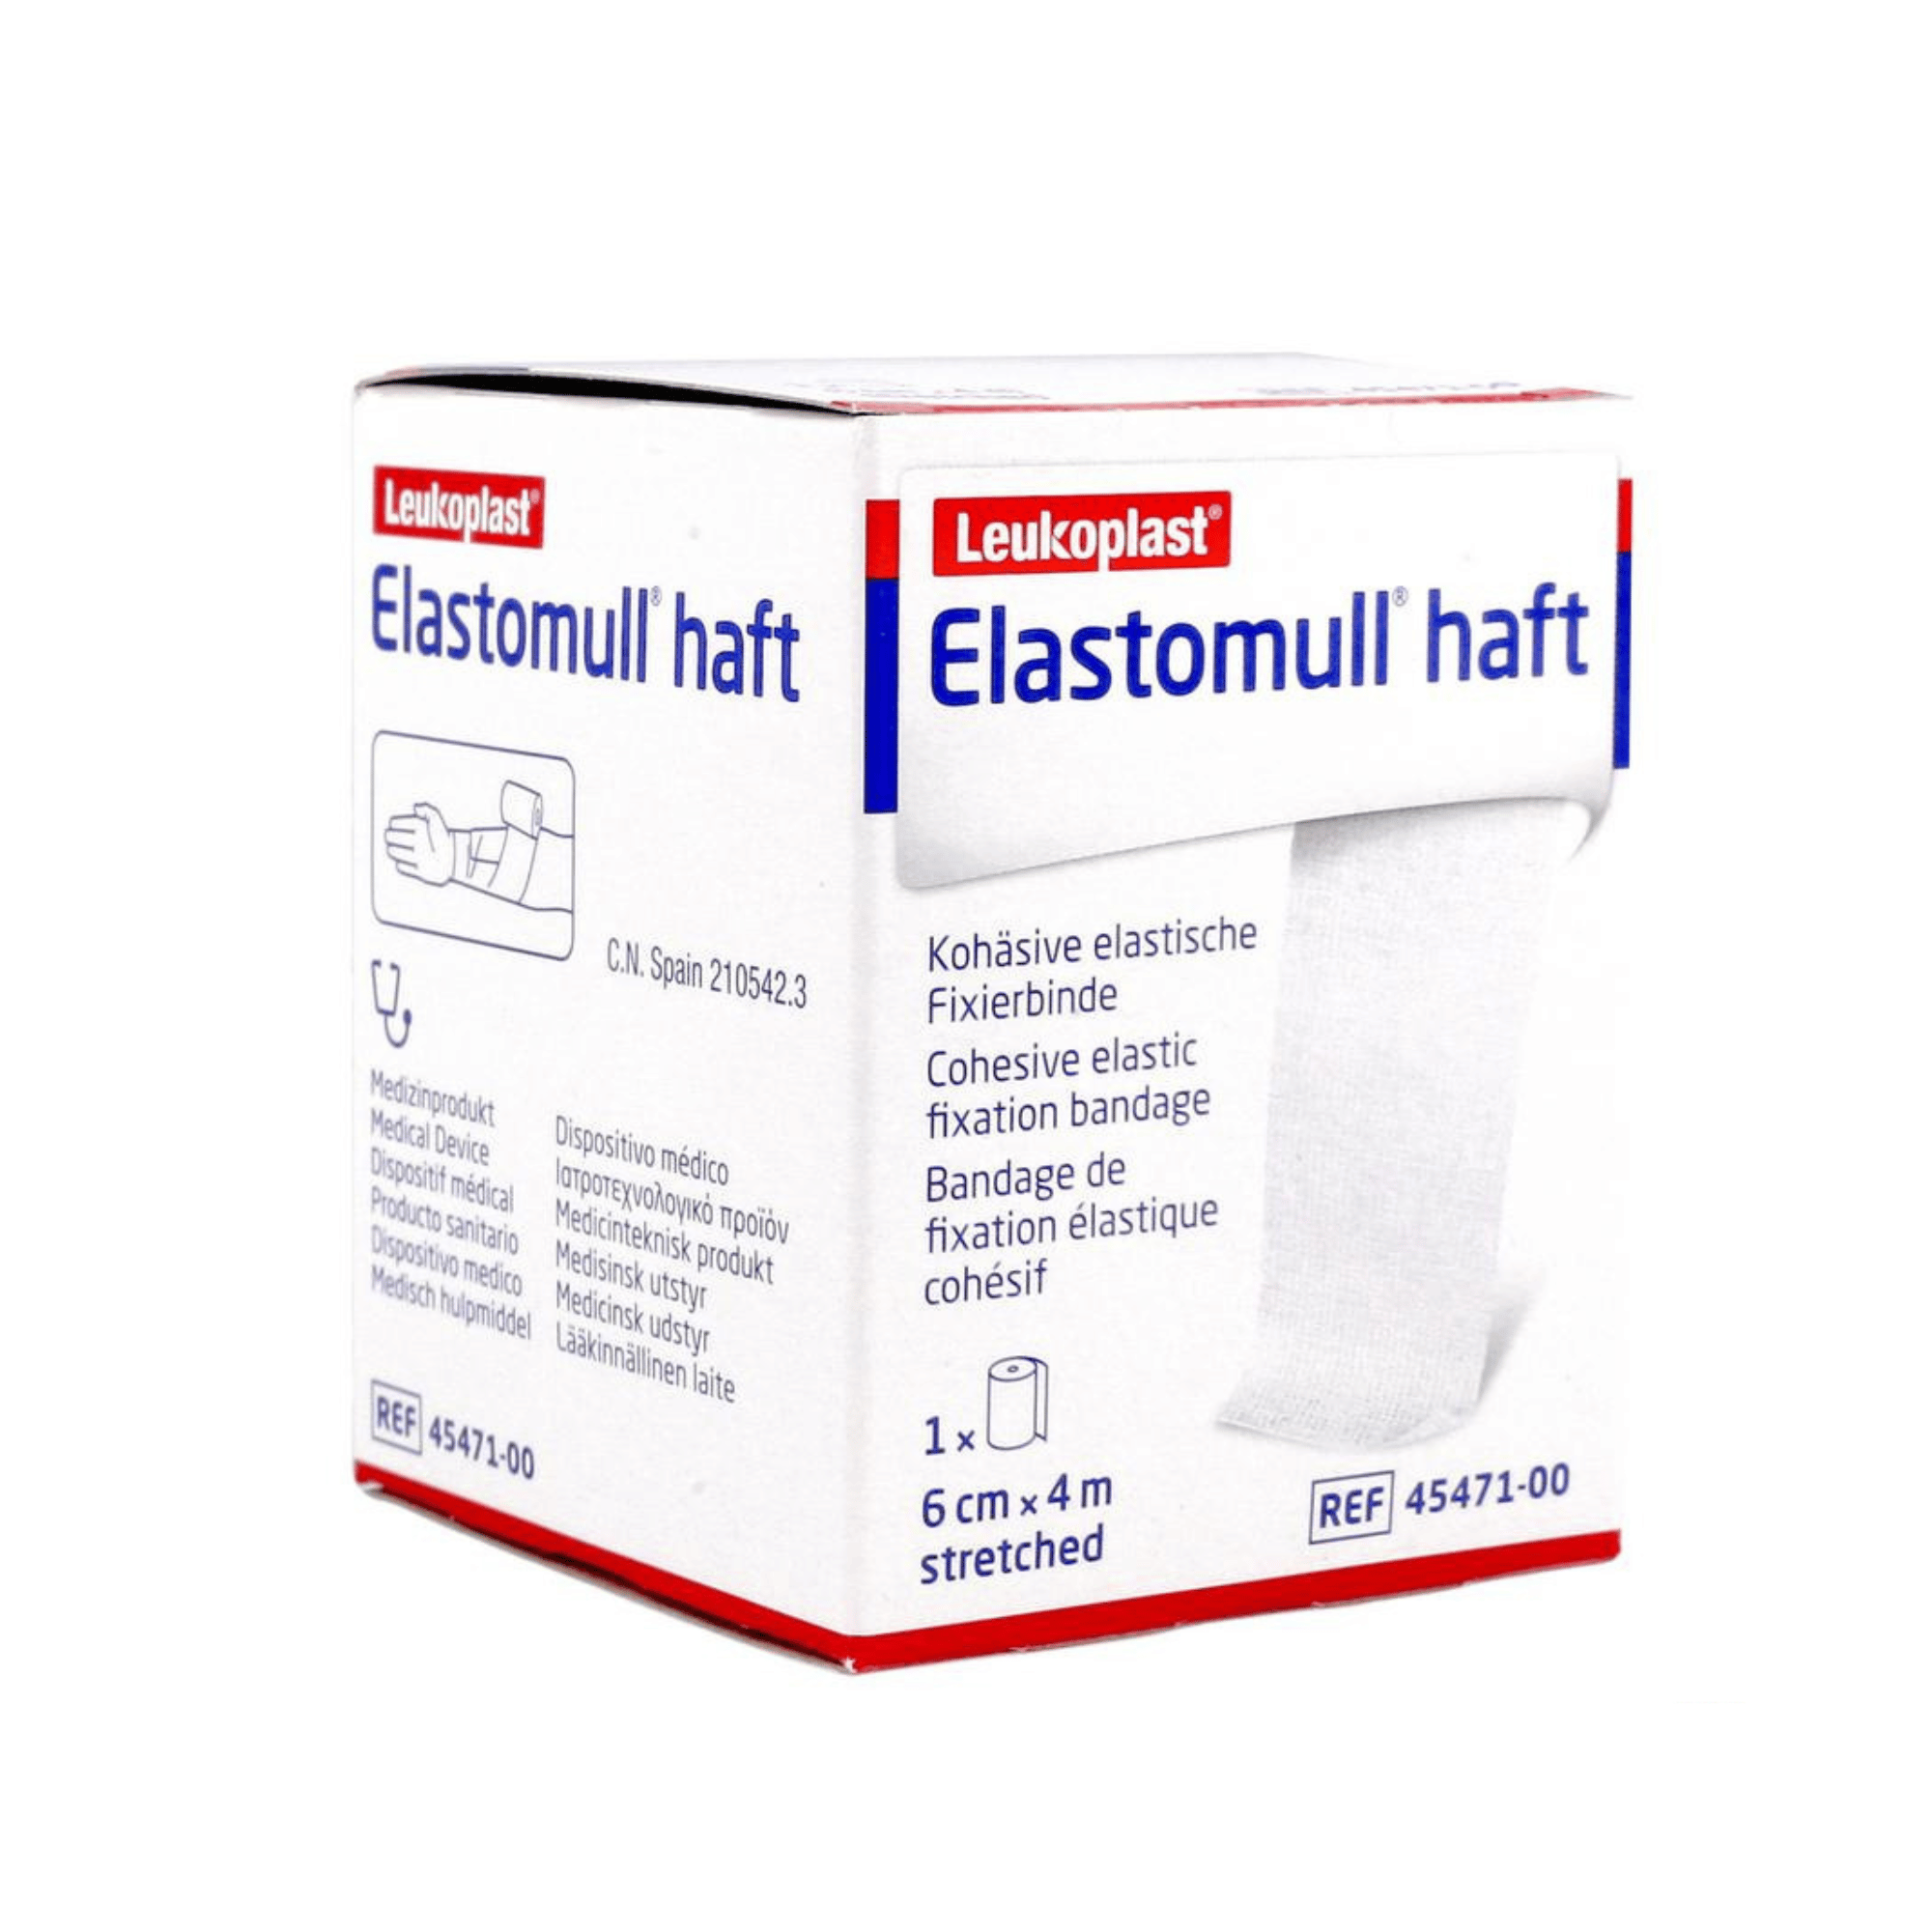 Bsn Medical Elastomull Haft Fixatiewindel 6 cm x 4 m